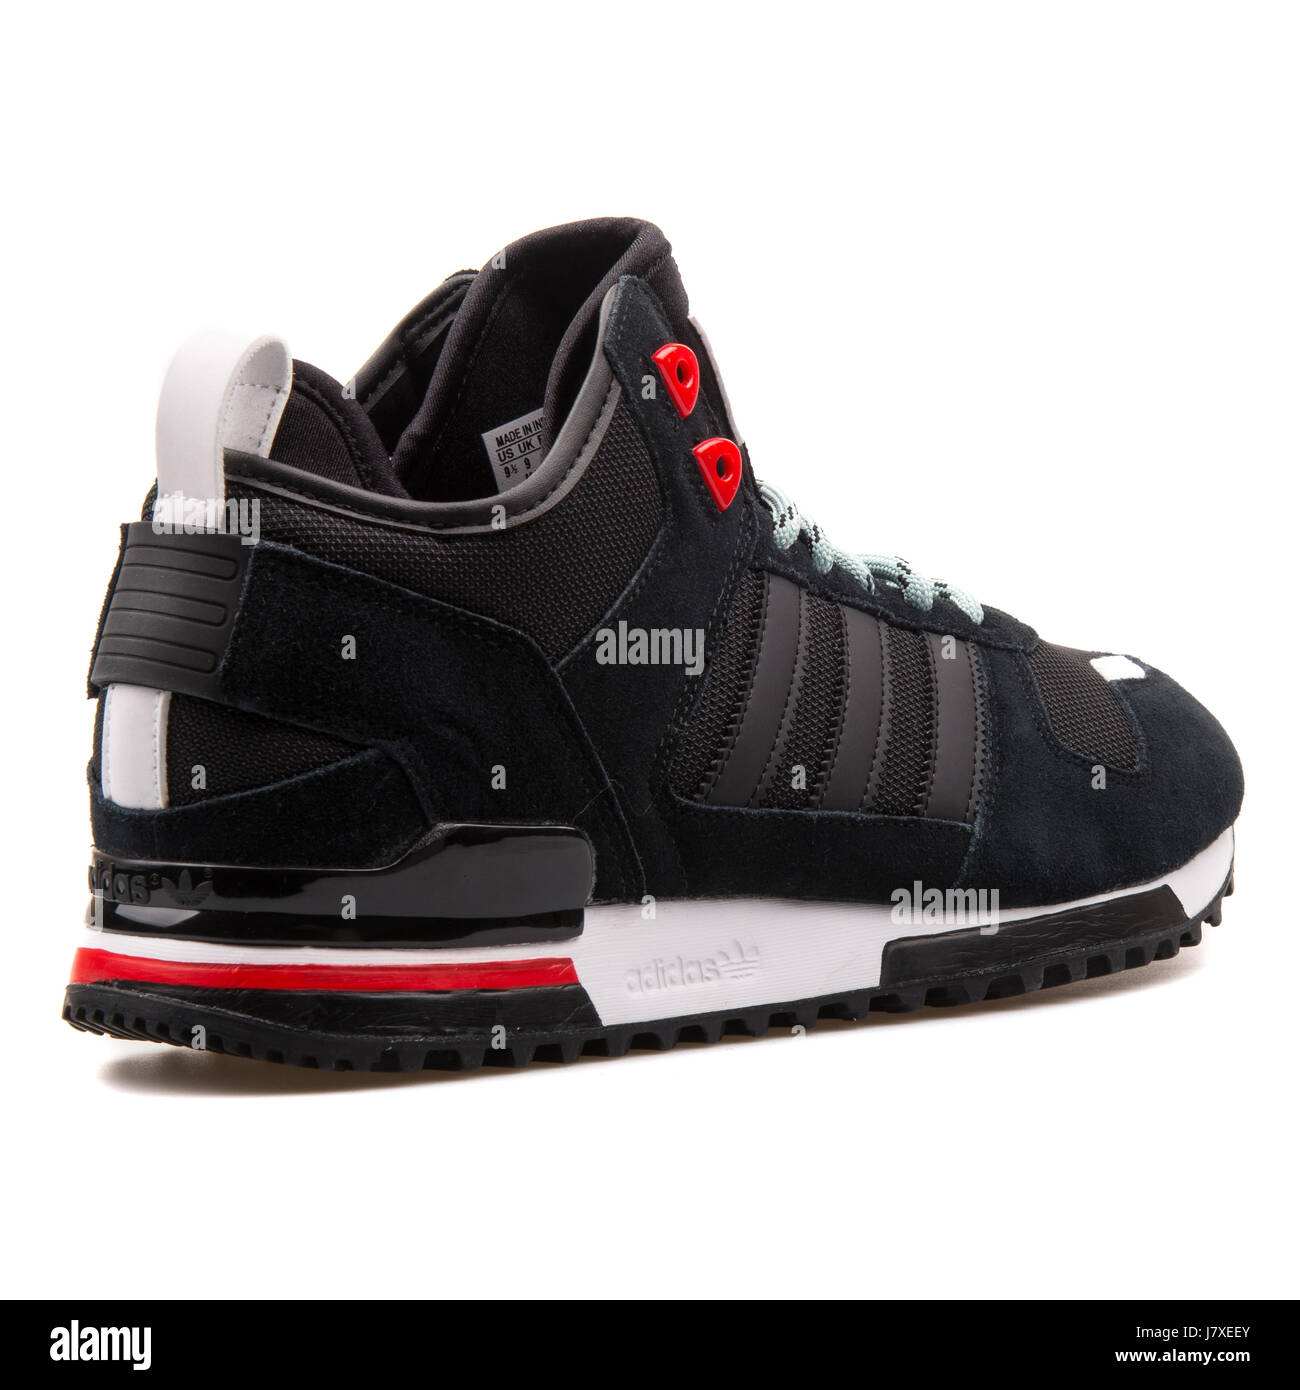 Adidas ZX700 Winter Men's Black Sneakers - B35236 Stock Photo - Alamy